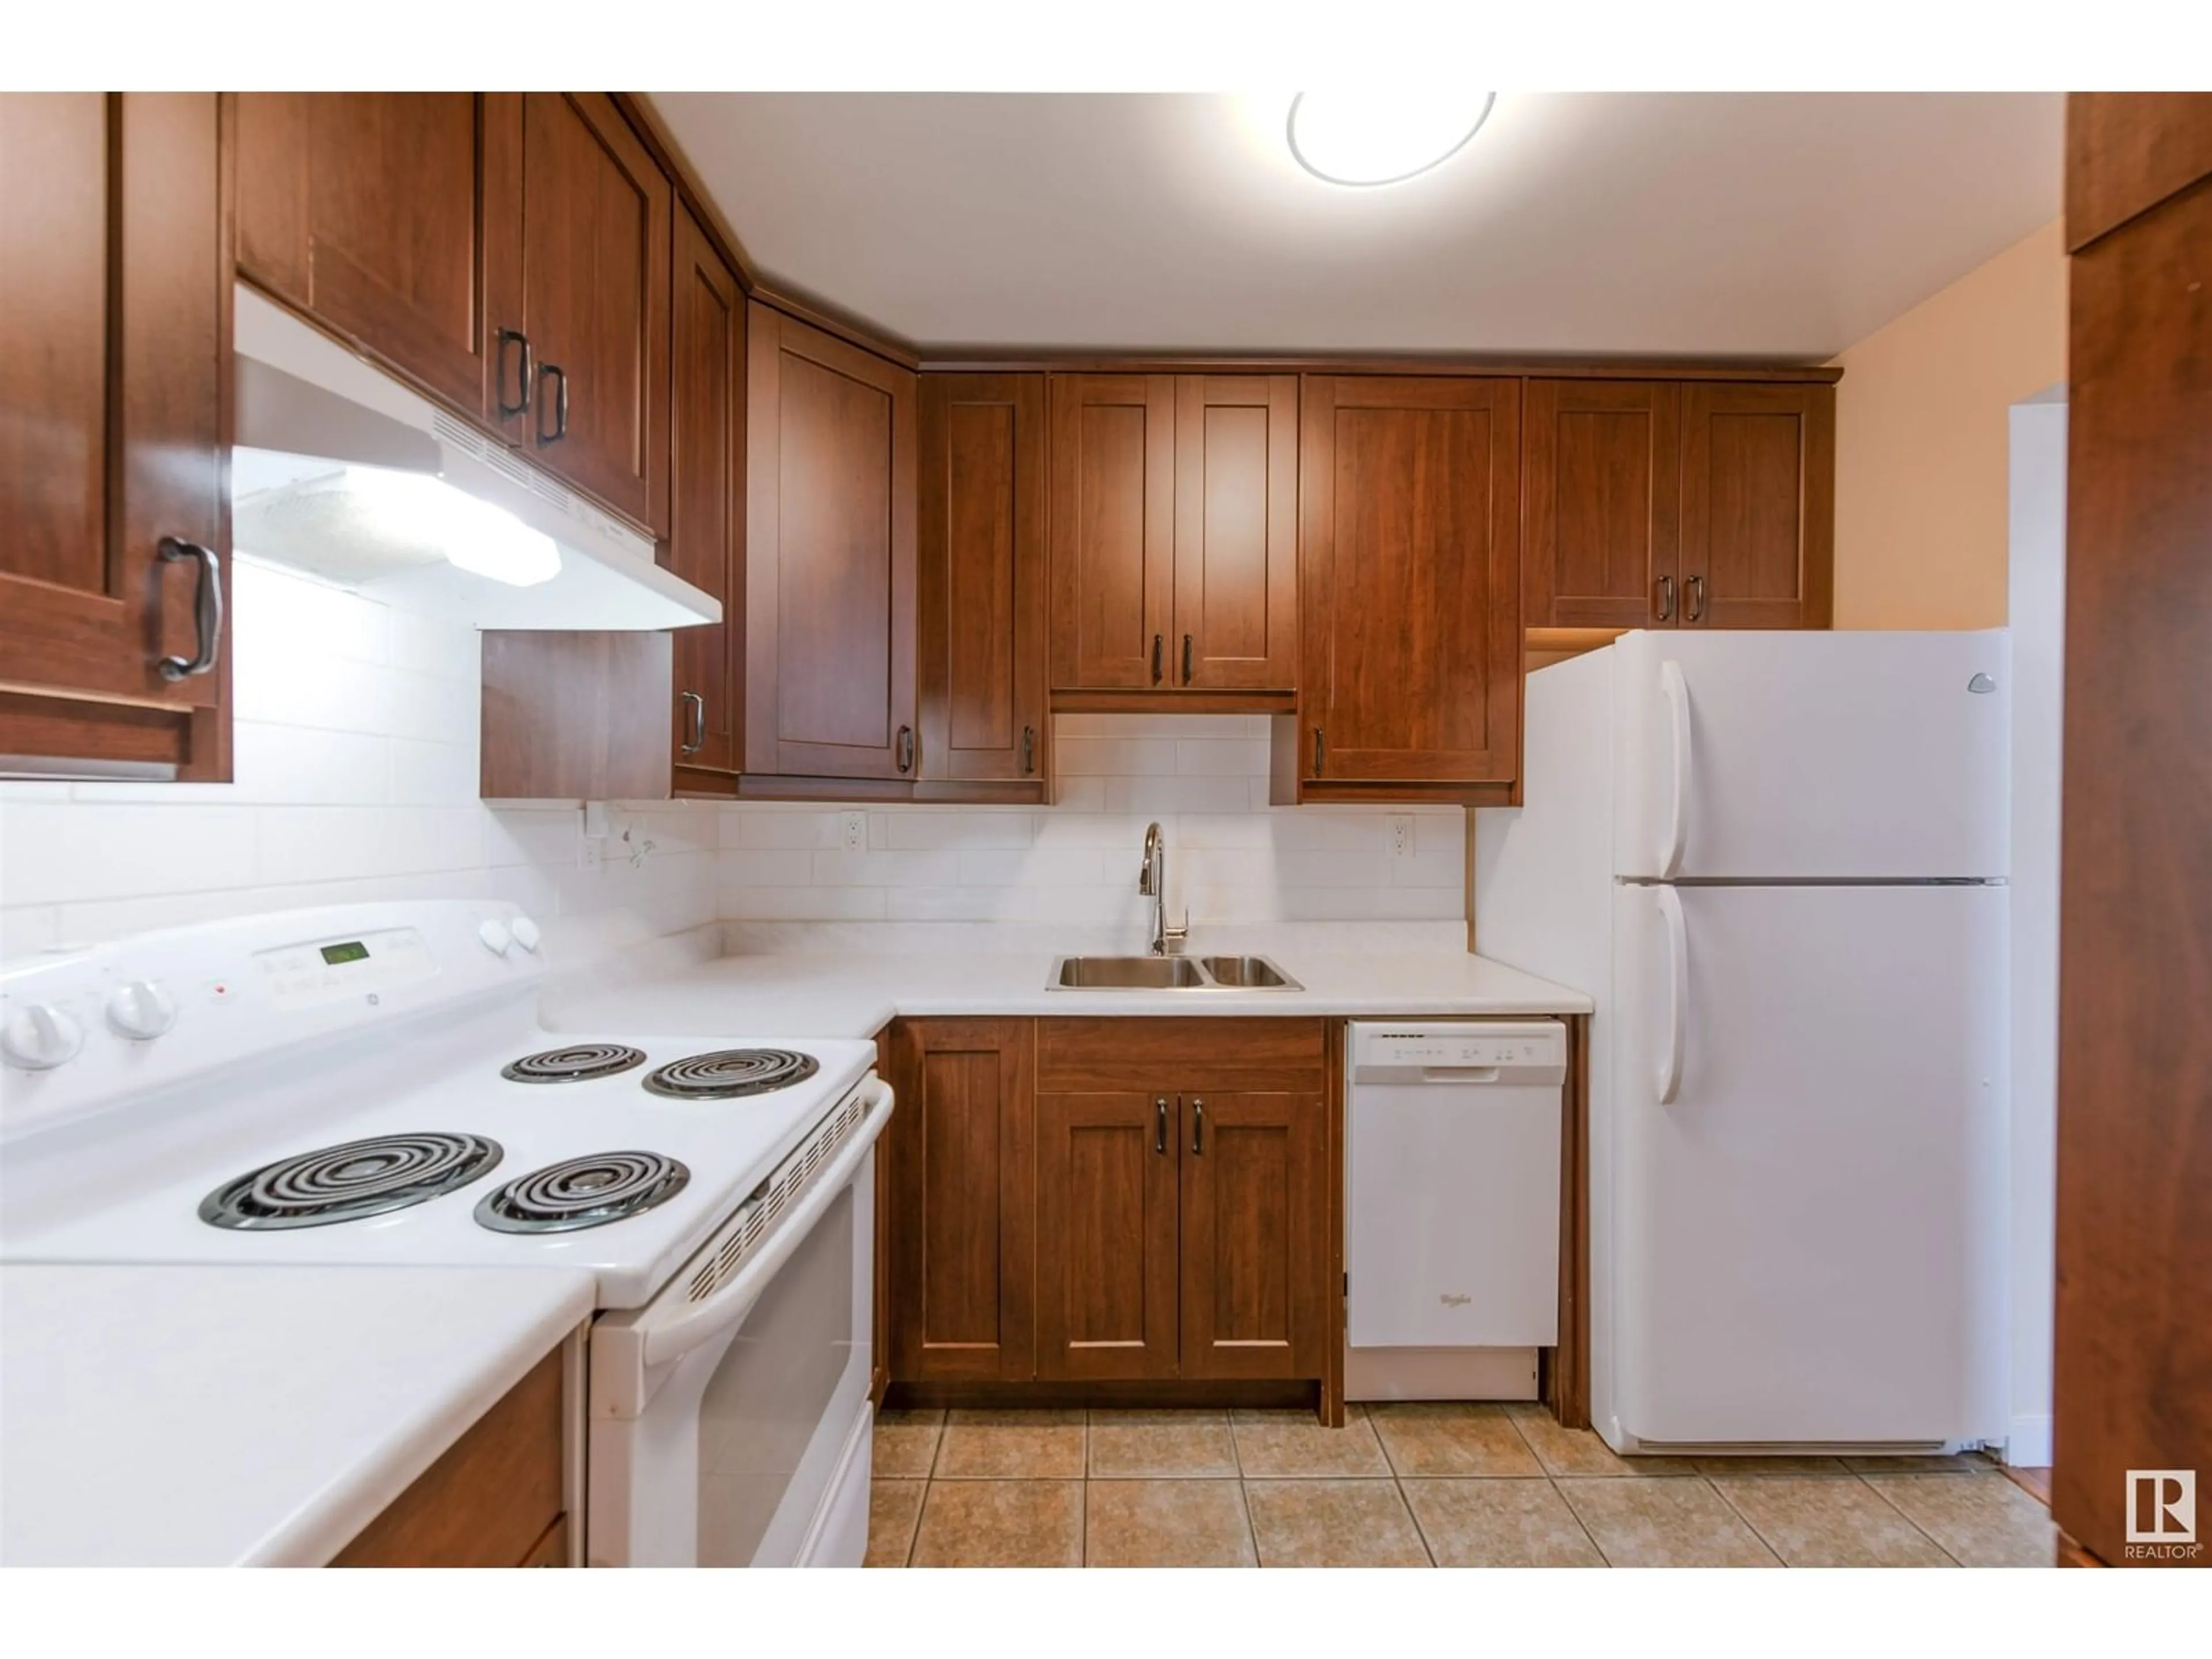 Standard kitchen for #402 1628 48 ST NW, Edmonton Alberta T6L5P2